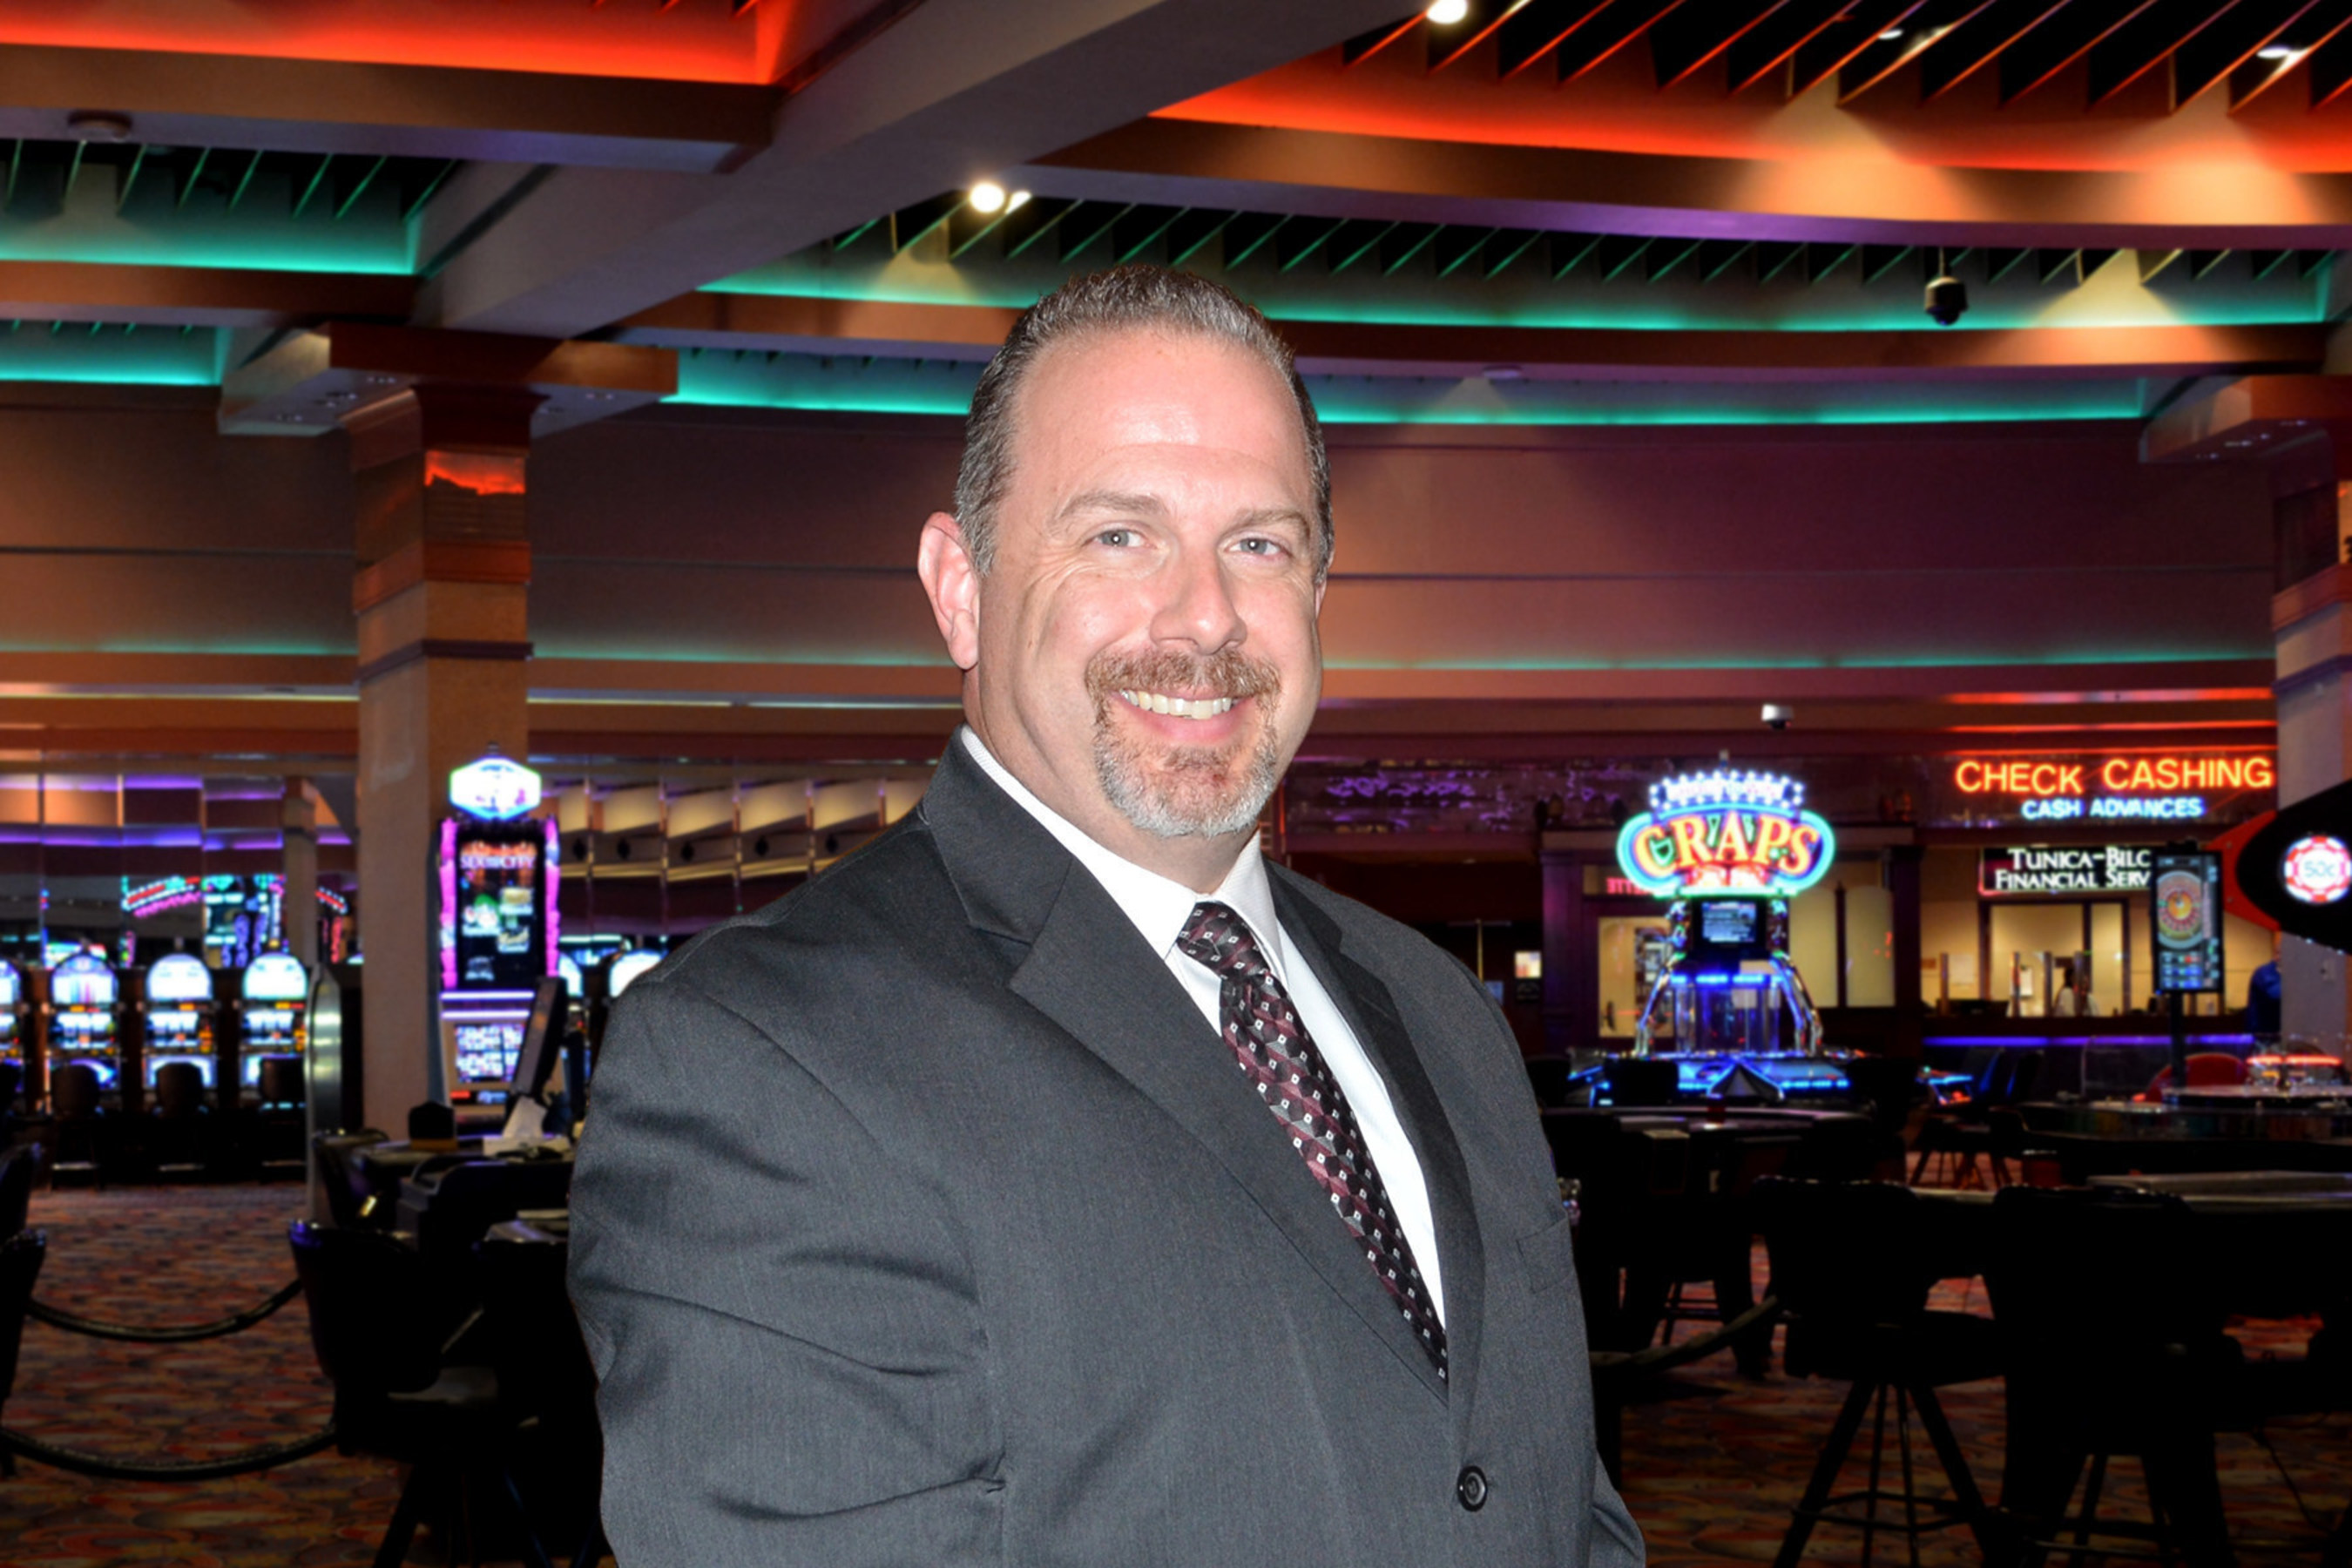 Michael Hamilton, Paragon Casino Resort General Manager